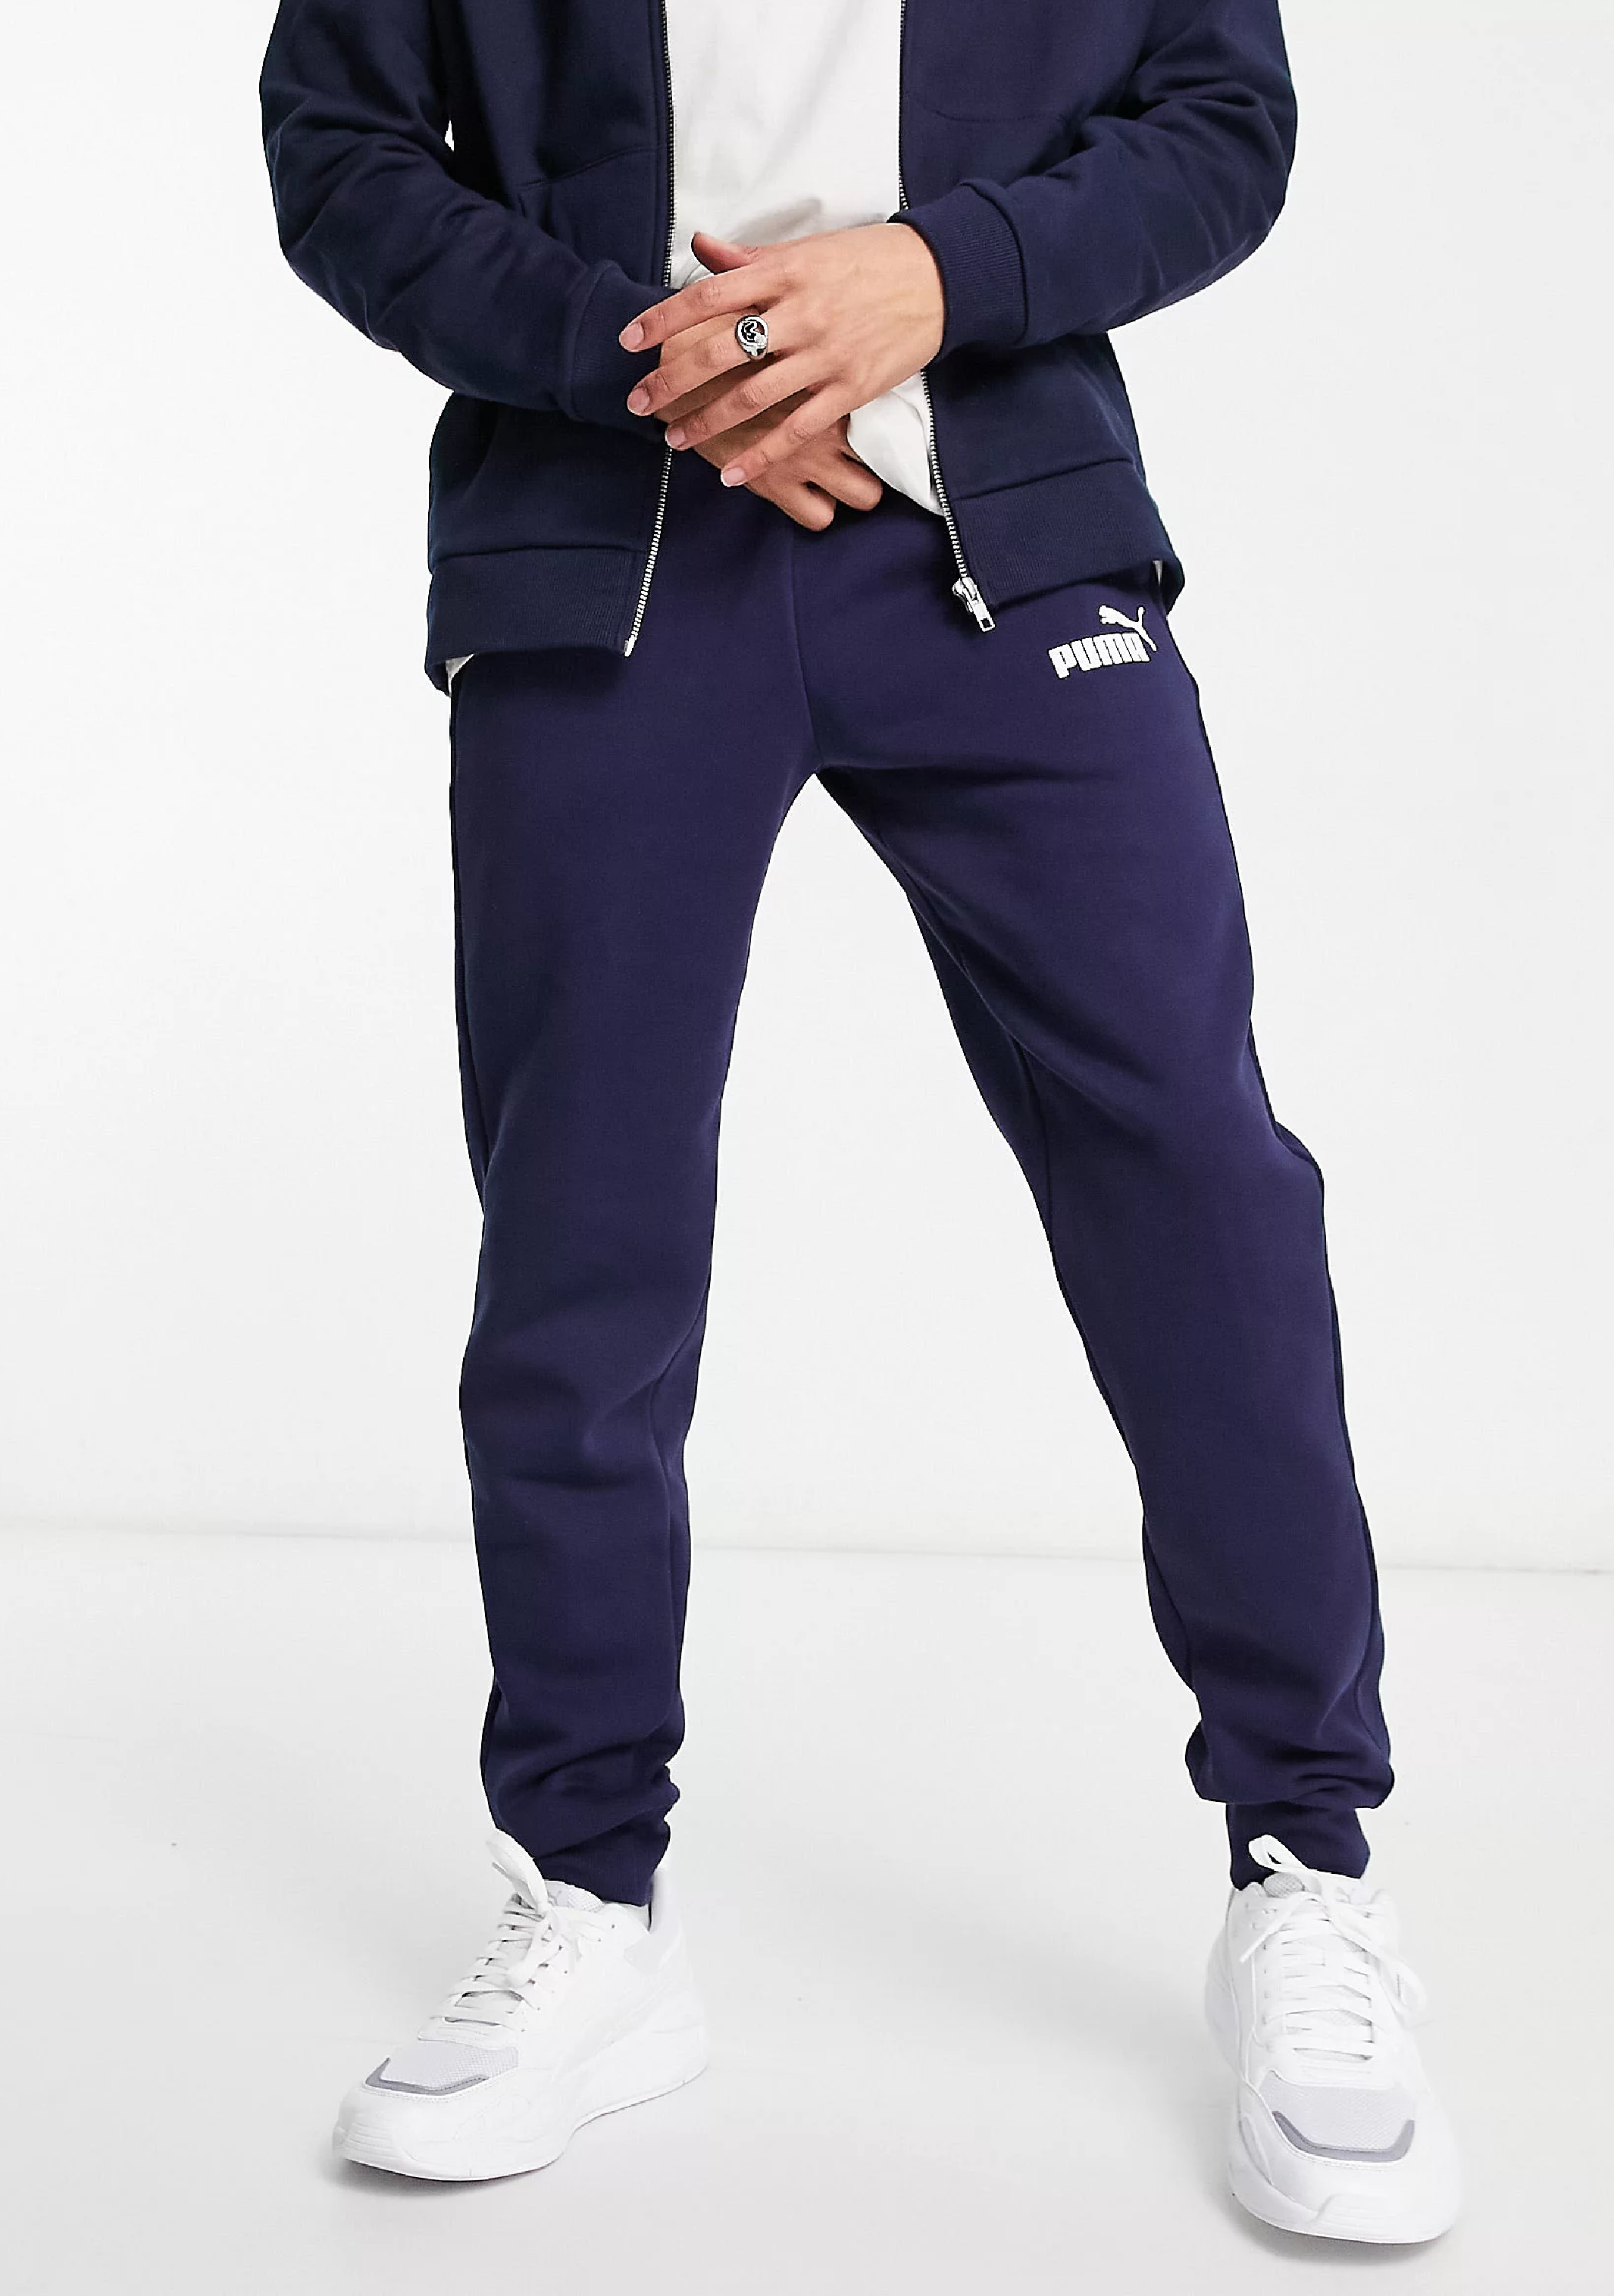 Puma Mens Essentials Logo Men's Sweatpants 586714 06 – Jim Kidd Sports